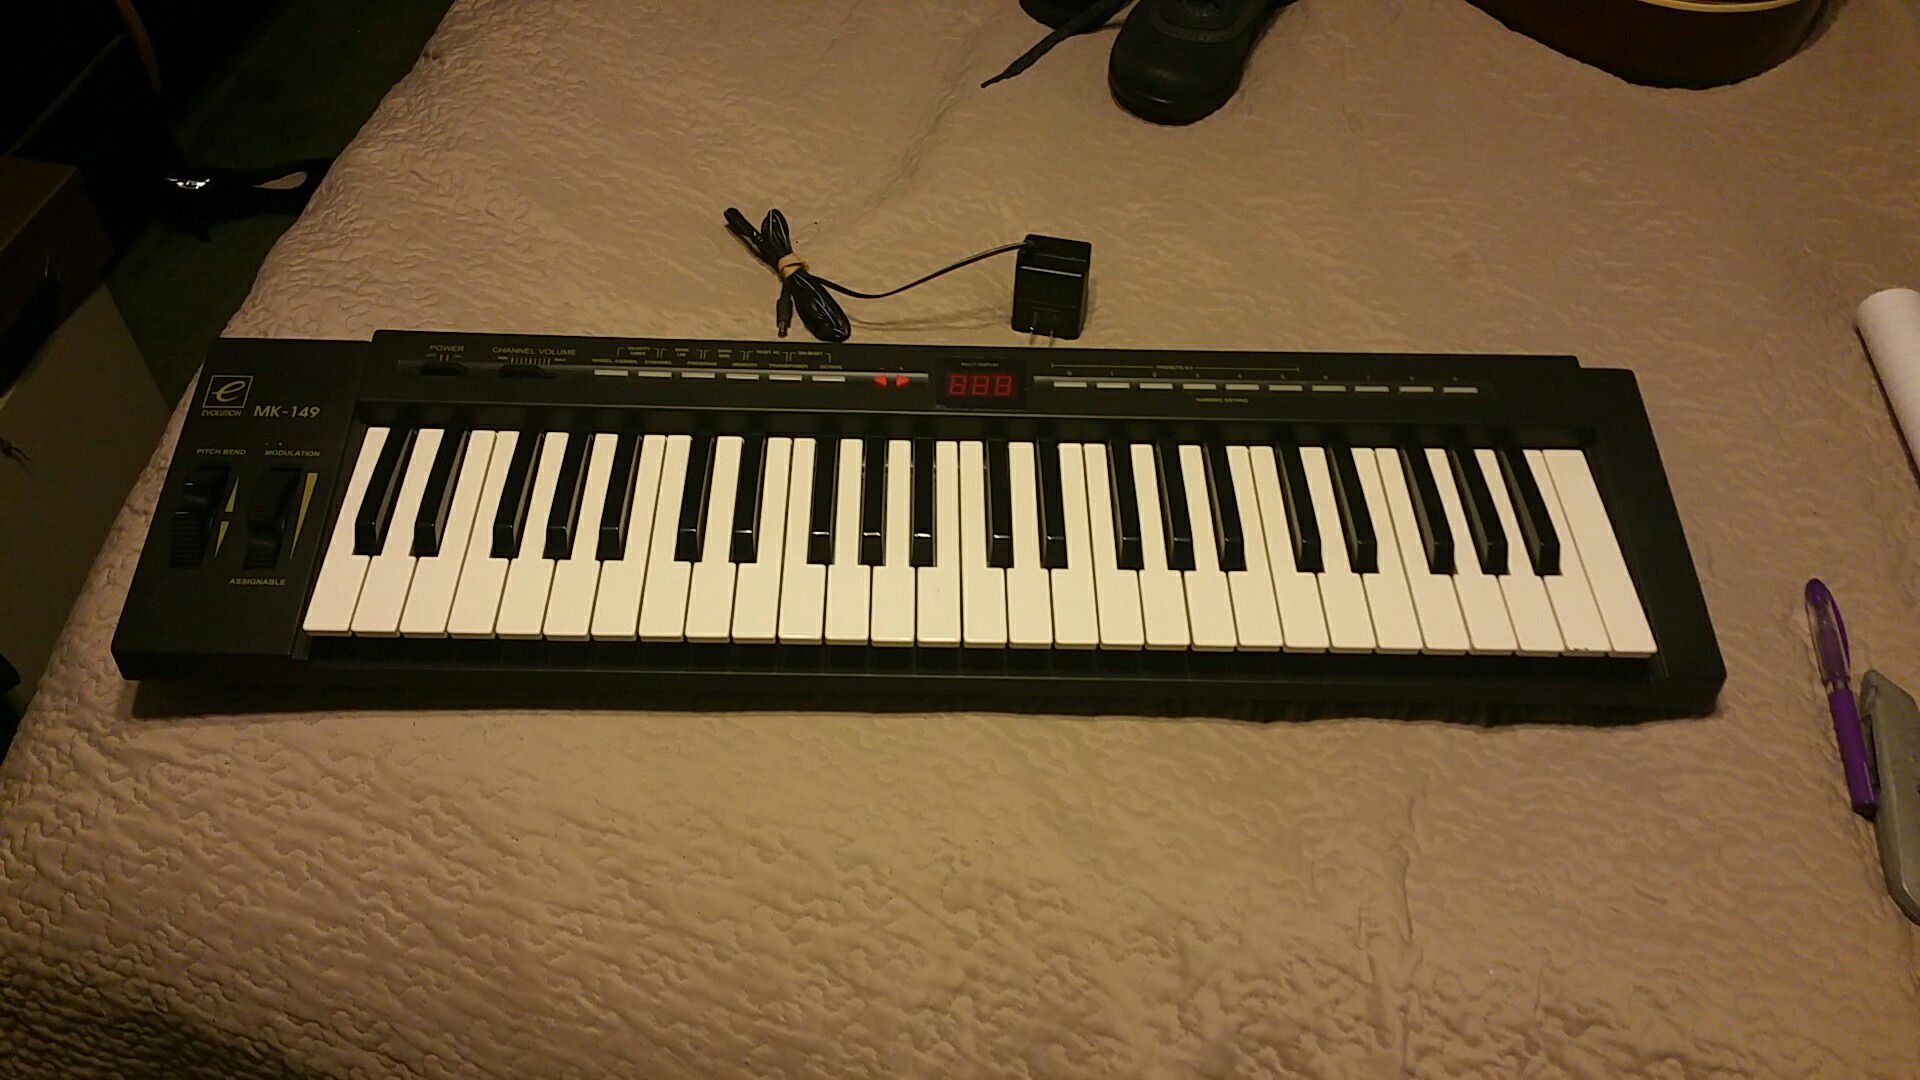 Evolution MK1 49 midi keyboard controller 49 Keys portable